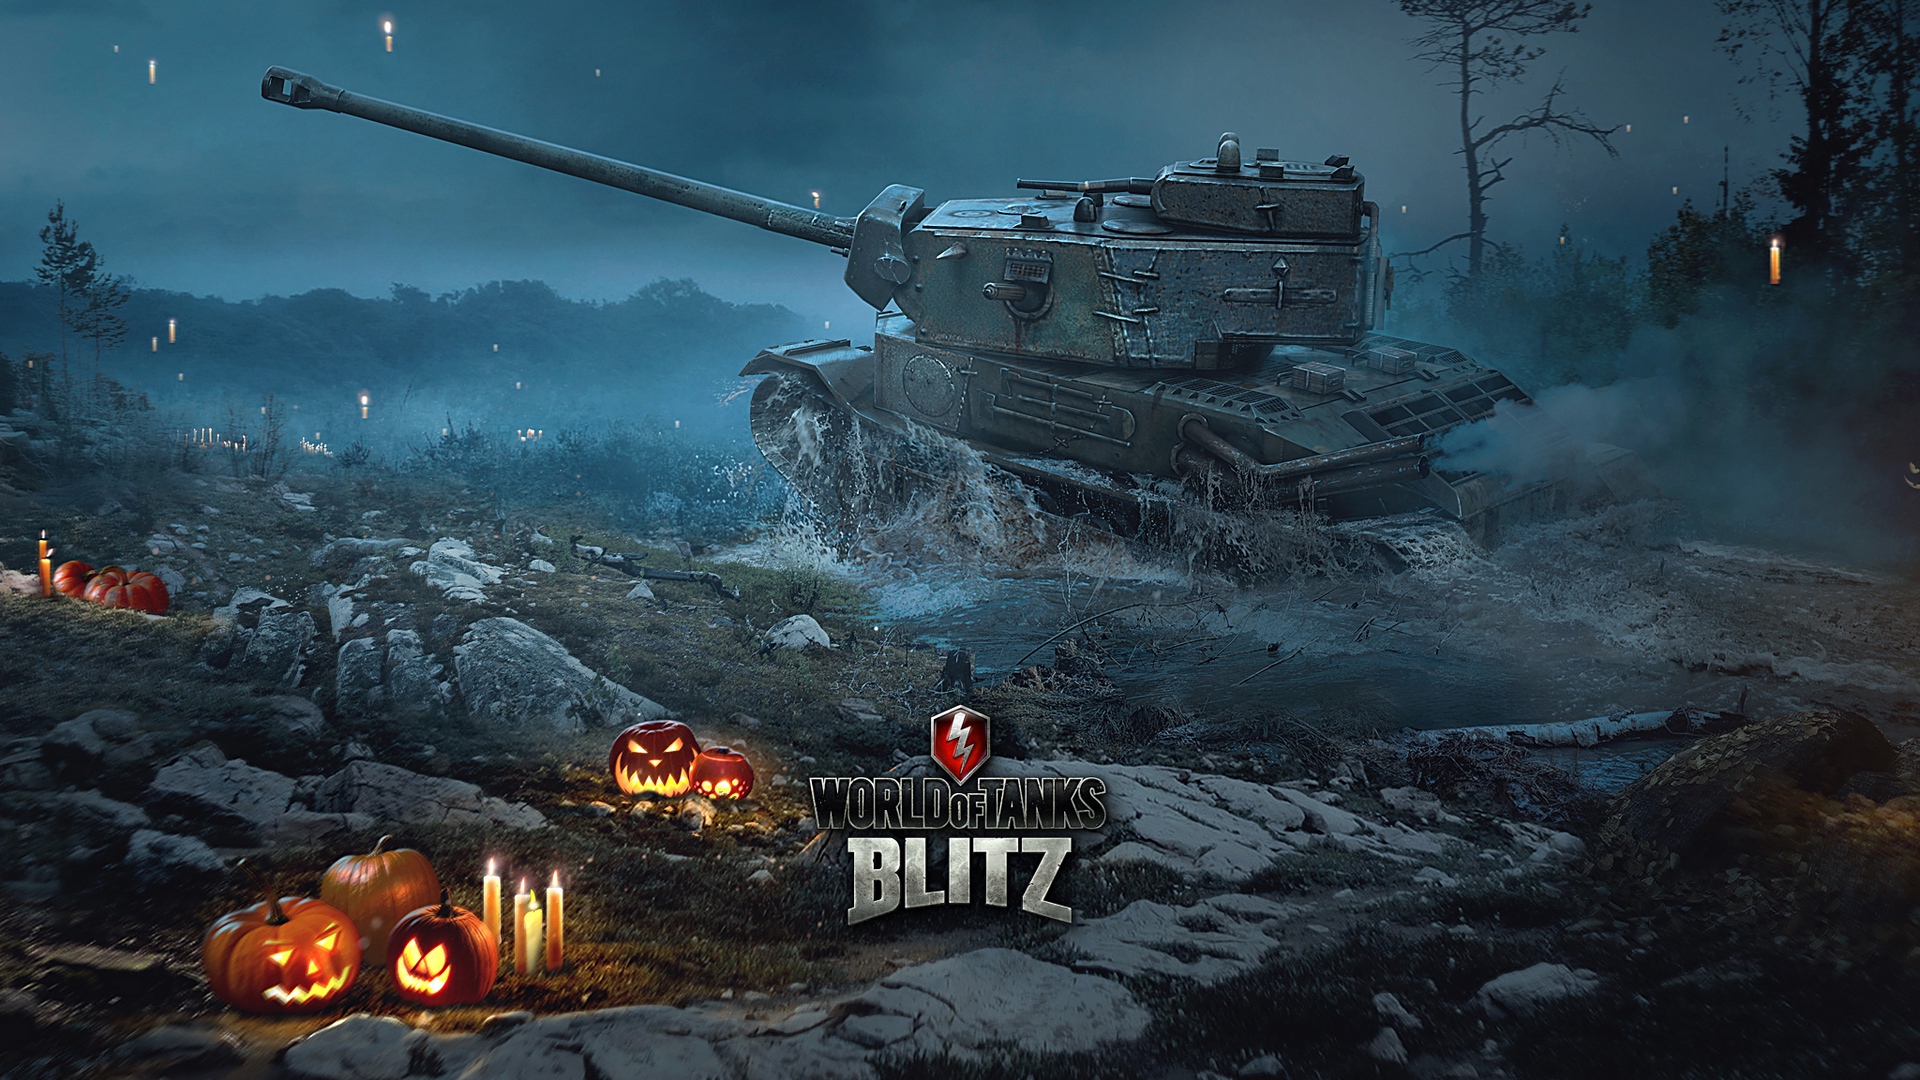 world of tanks blitz download free